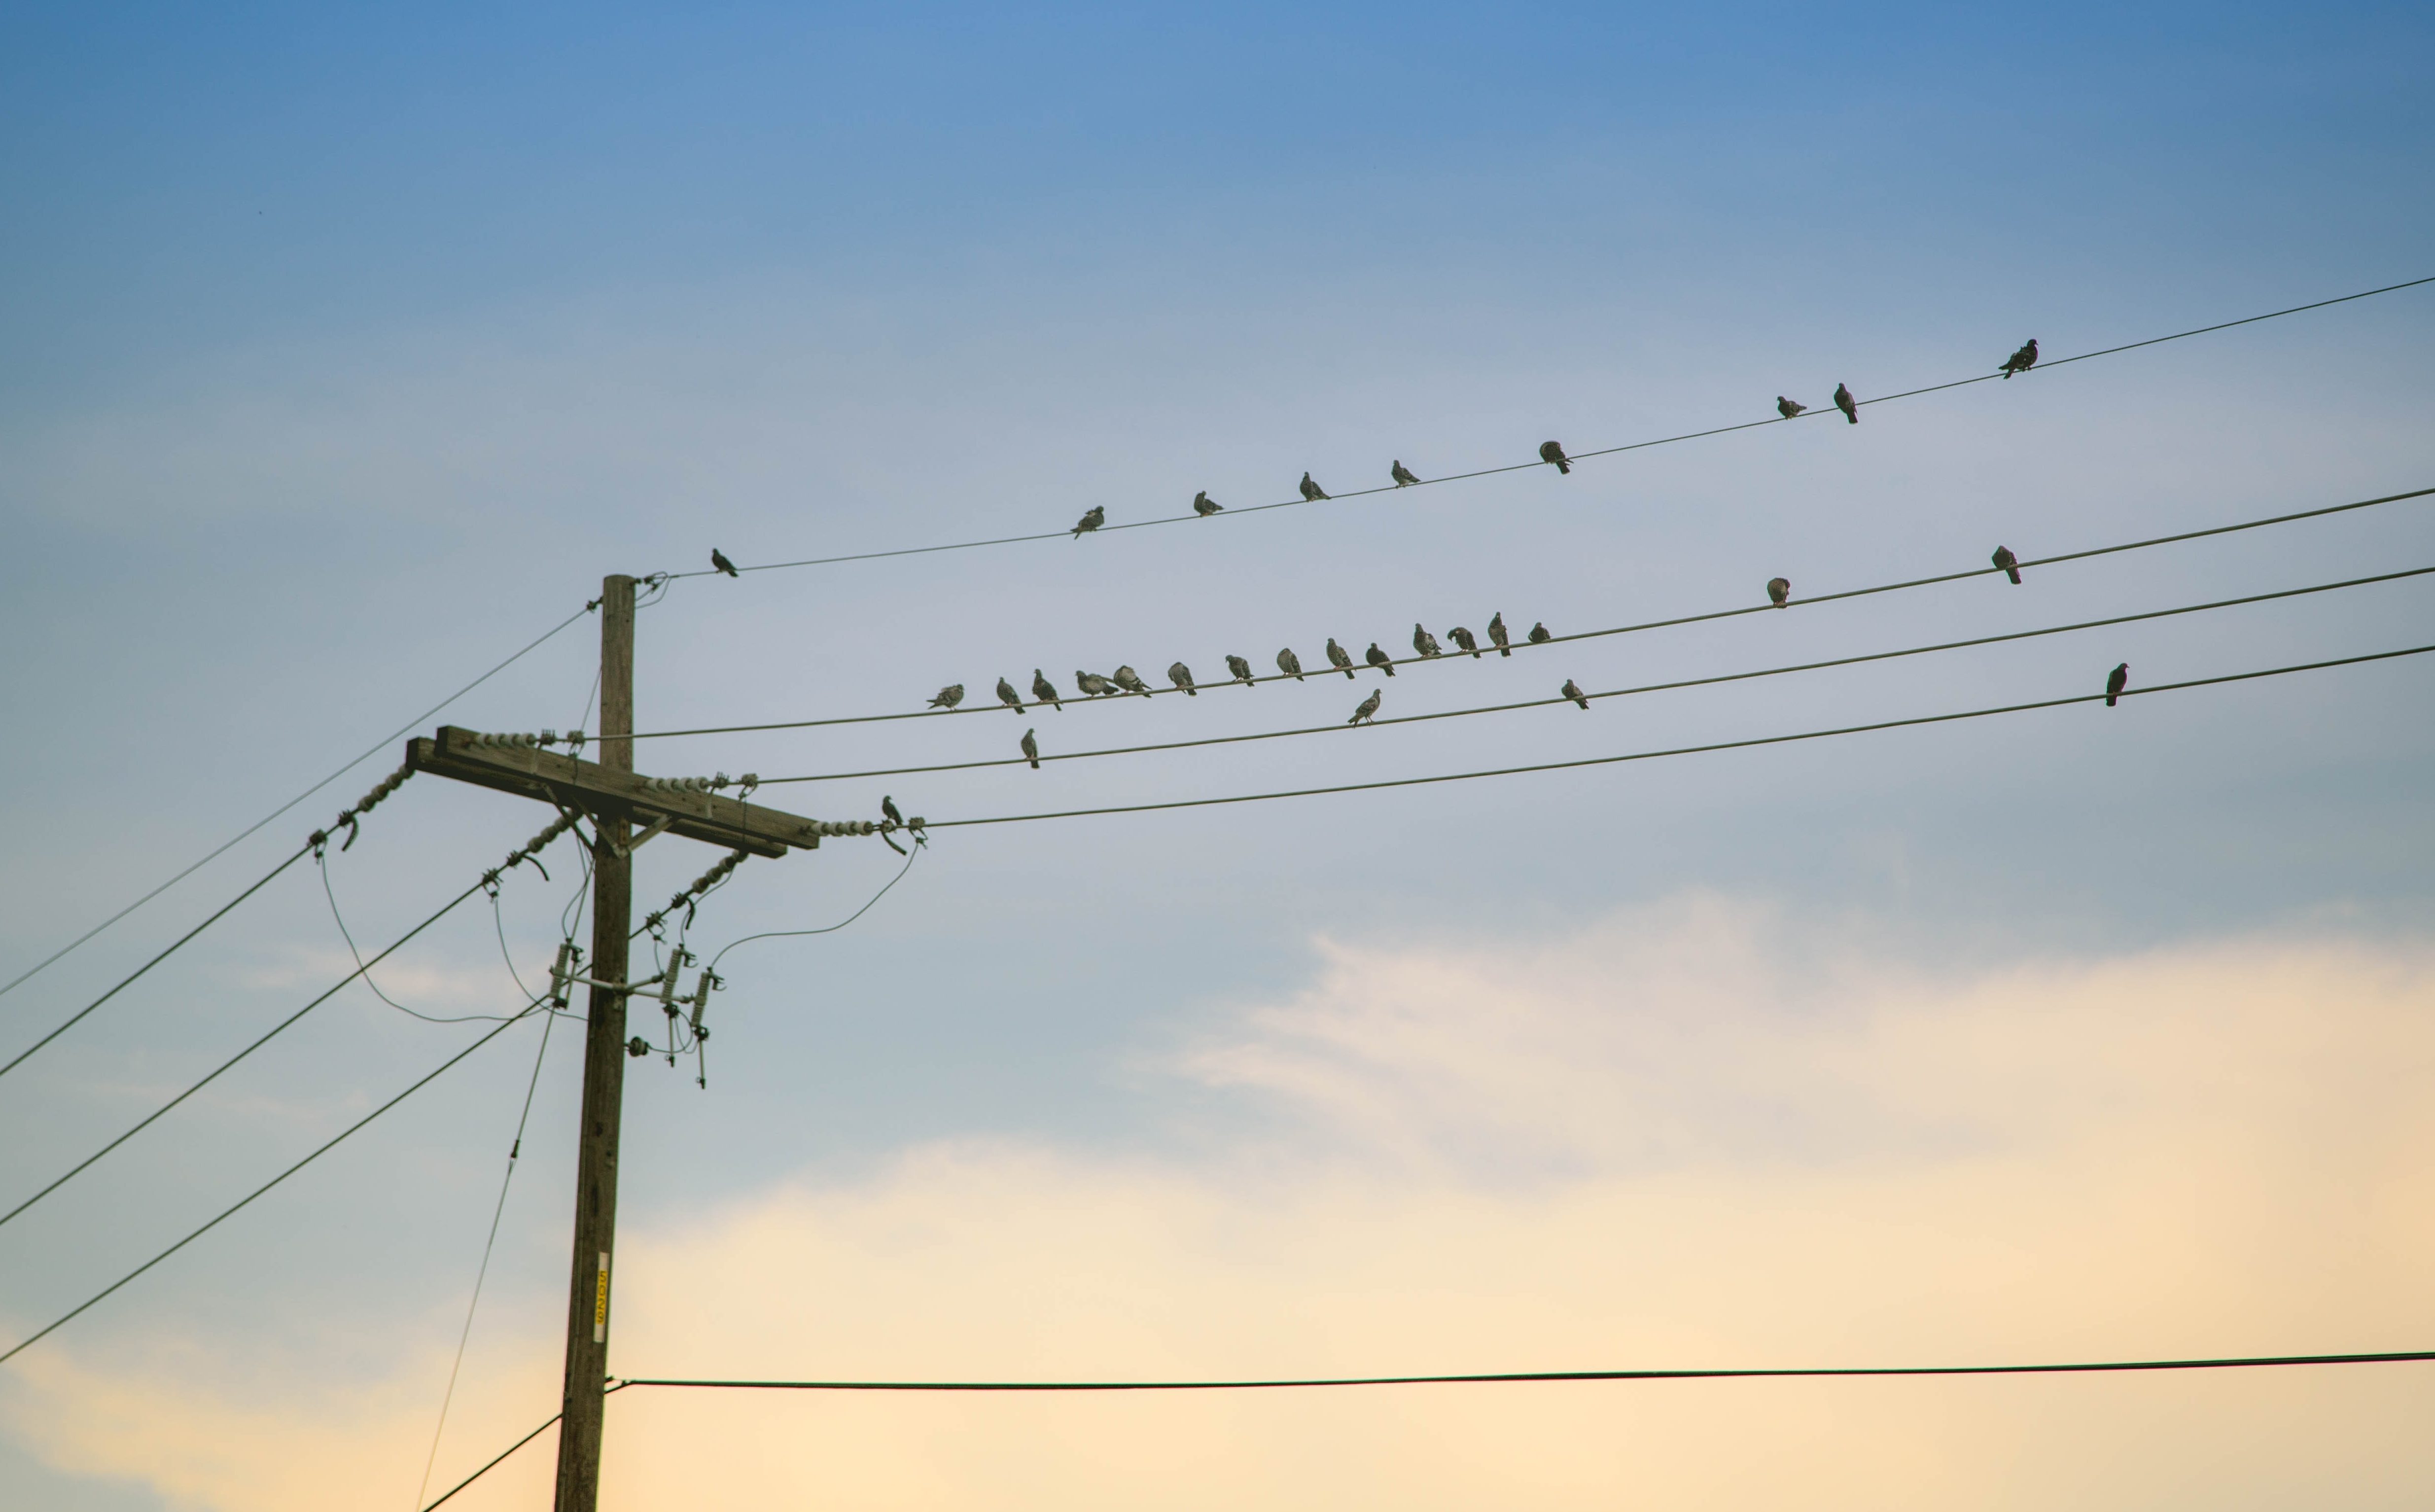 Birds sitting on power lines